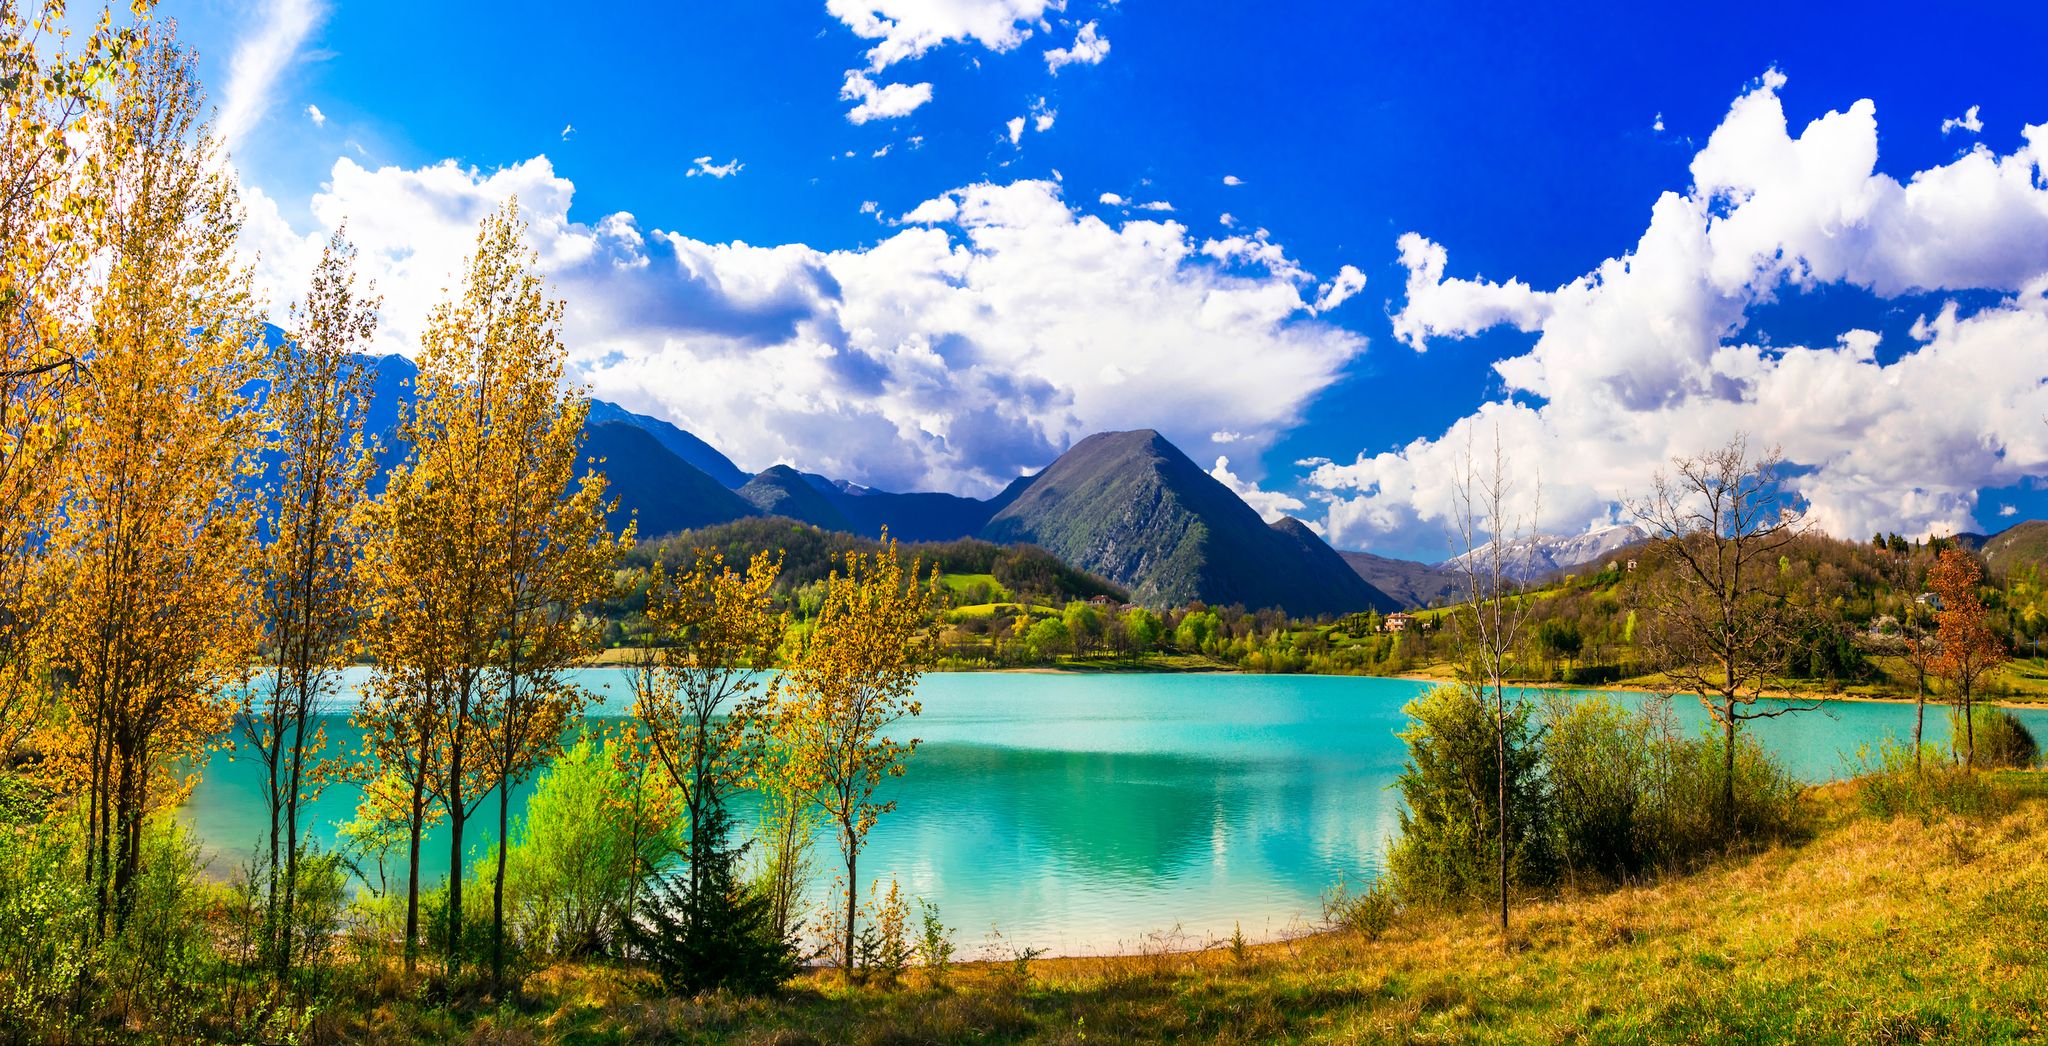 Beautiful autumn landscape with turquoise lake Lago di Castel San Vincenzo in Molise, Italy